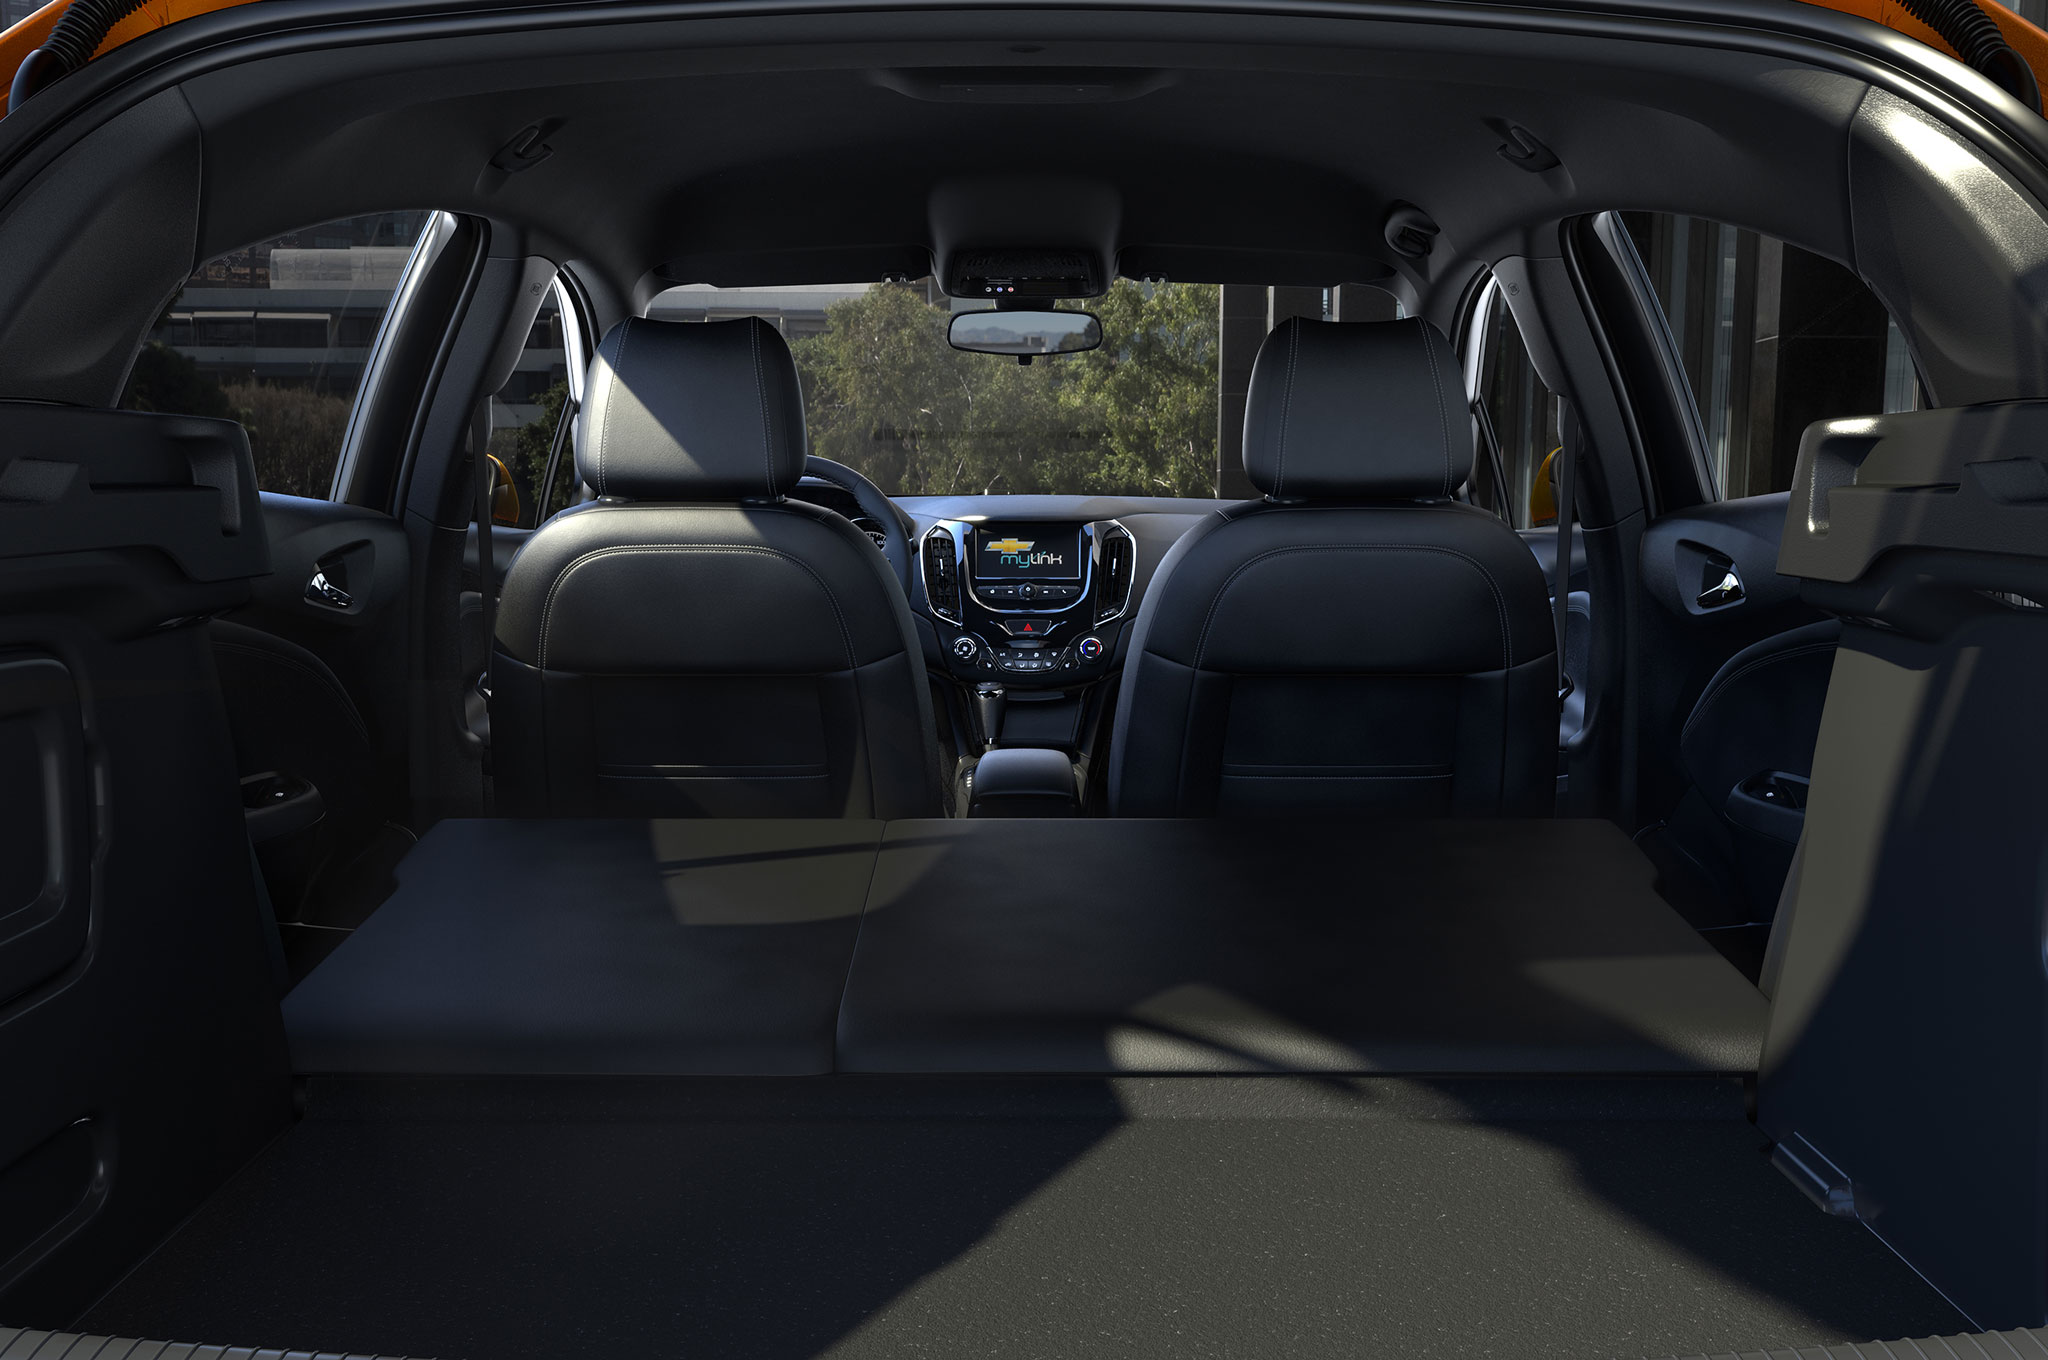 2017 Chevrolet Cruze Hatchback interior